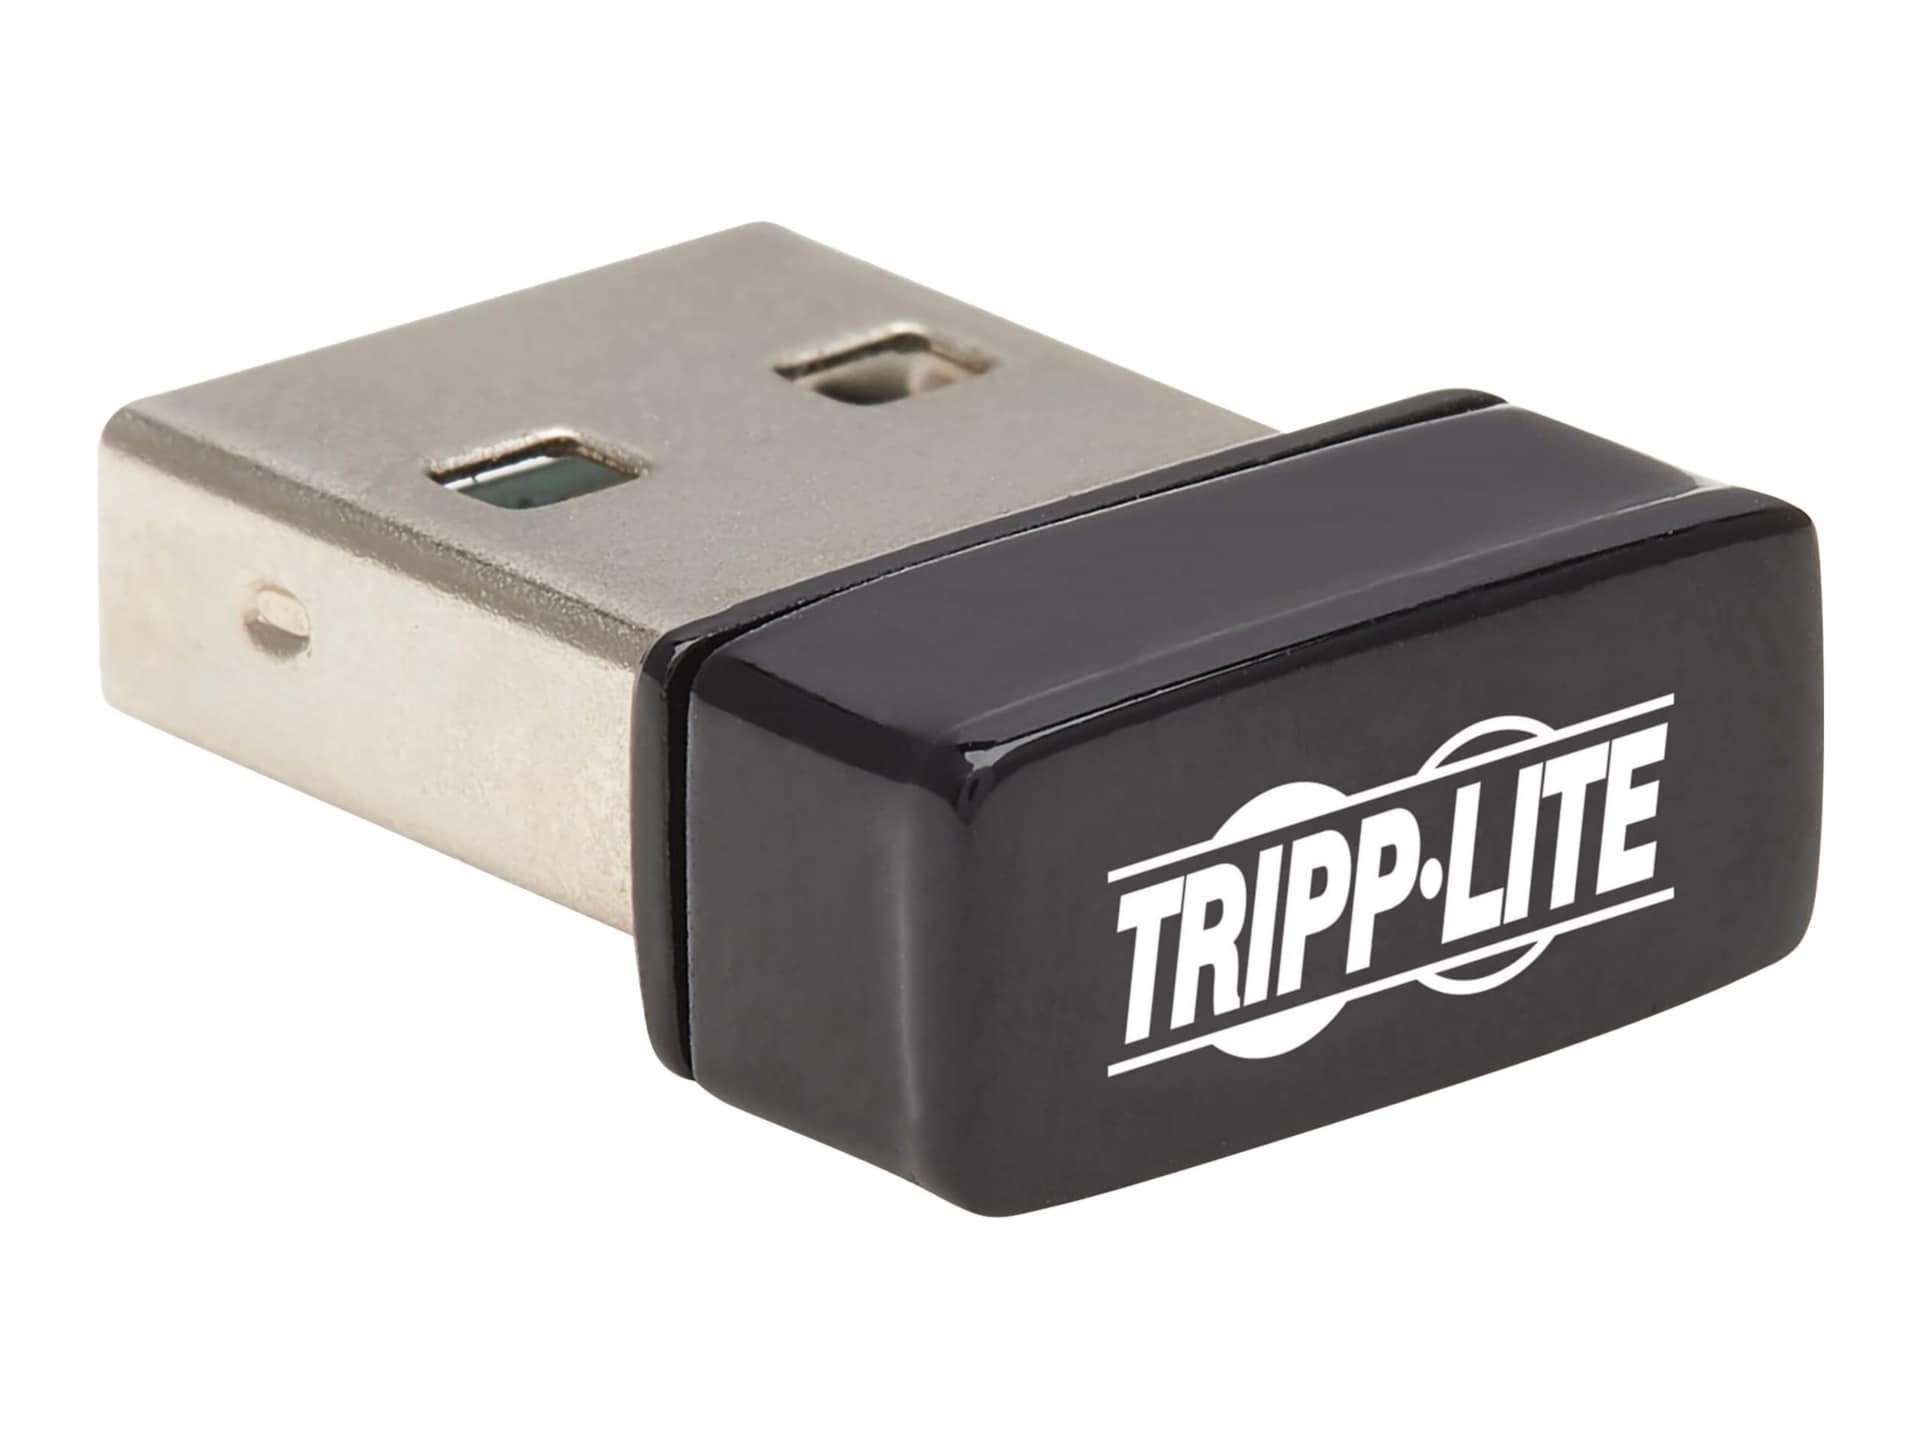 Tripp USB 2.0 Wi-Fi Adapter, AC600 2.4Ghz/5Ghz Dual Band, 1T1R, 802.11 ac - network - USB 2.0 - U263-AC600 - Adapters -